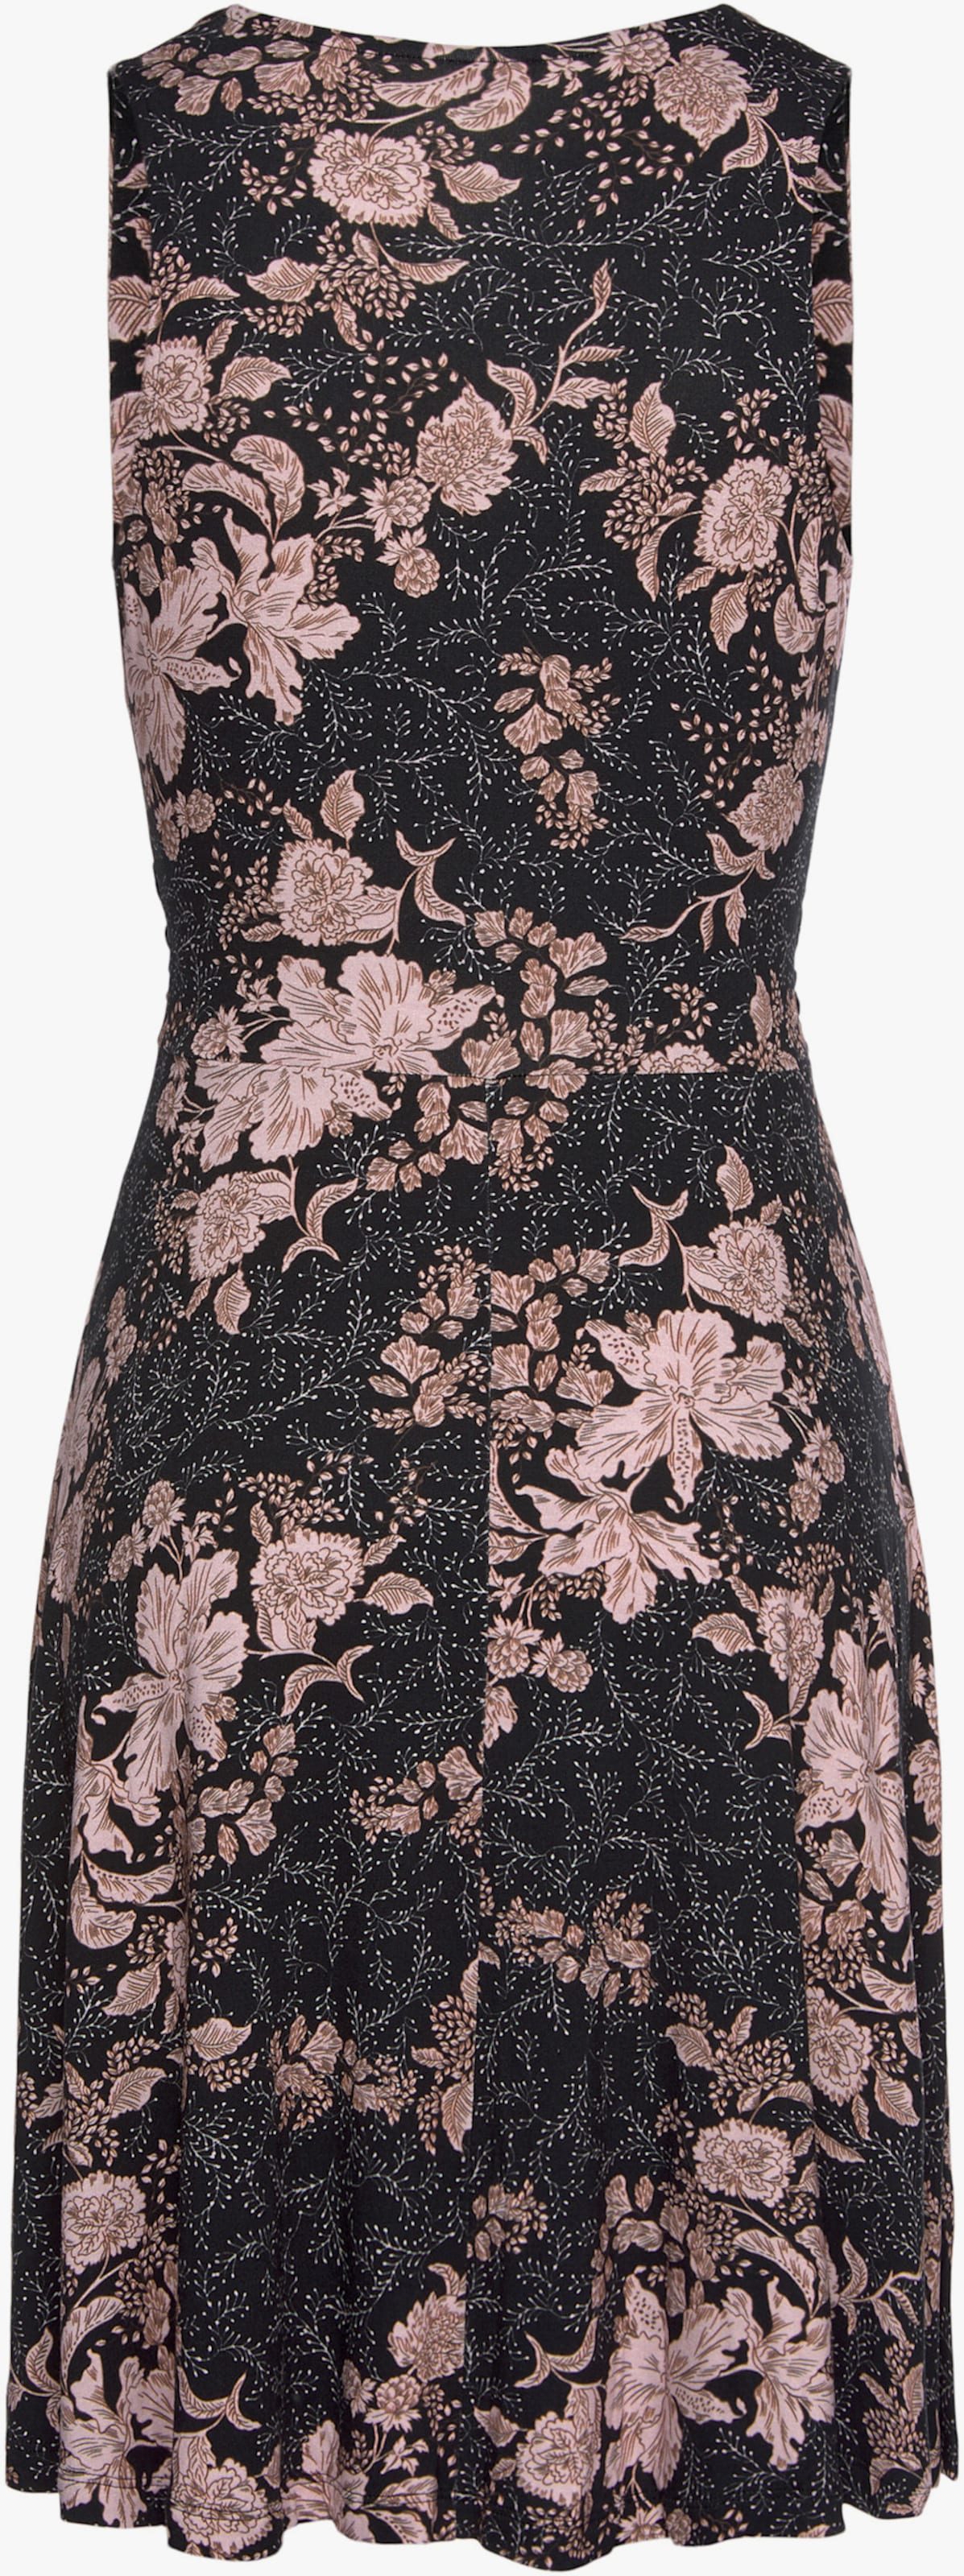 Vivance Jersey jurk - zwart/roze bedrukt